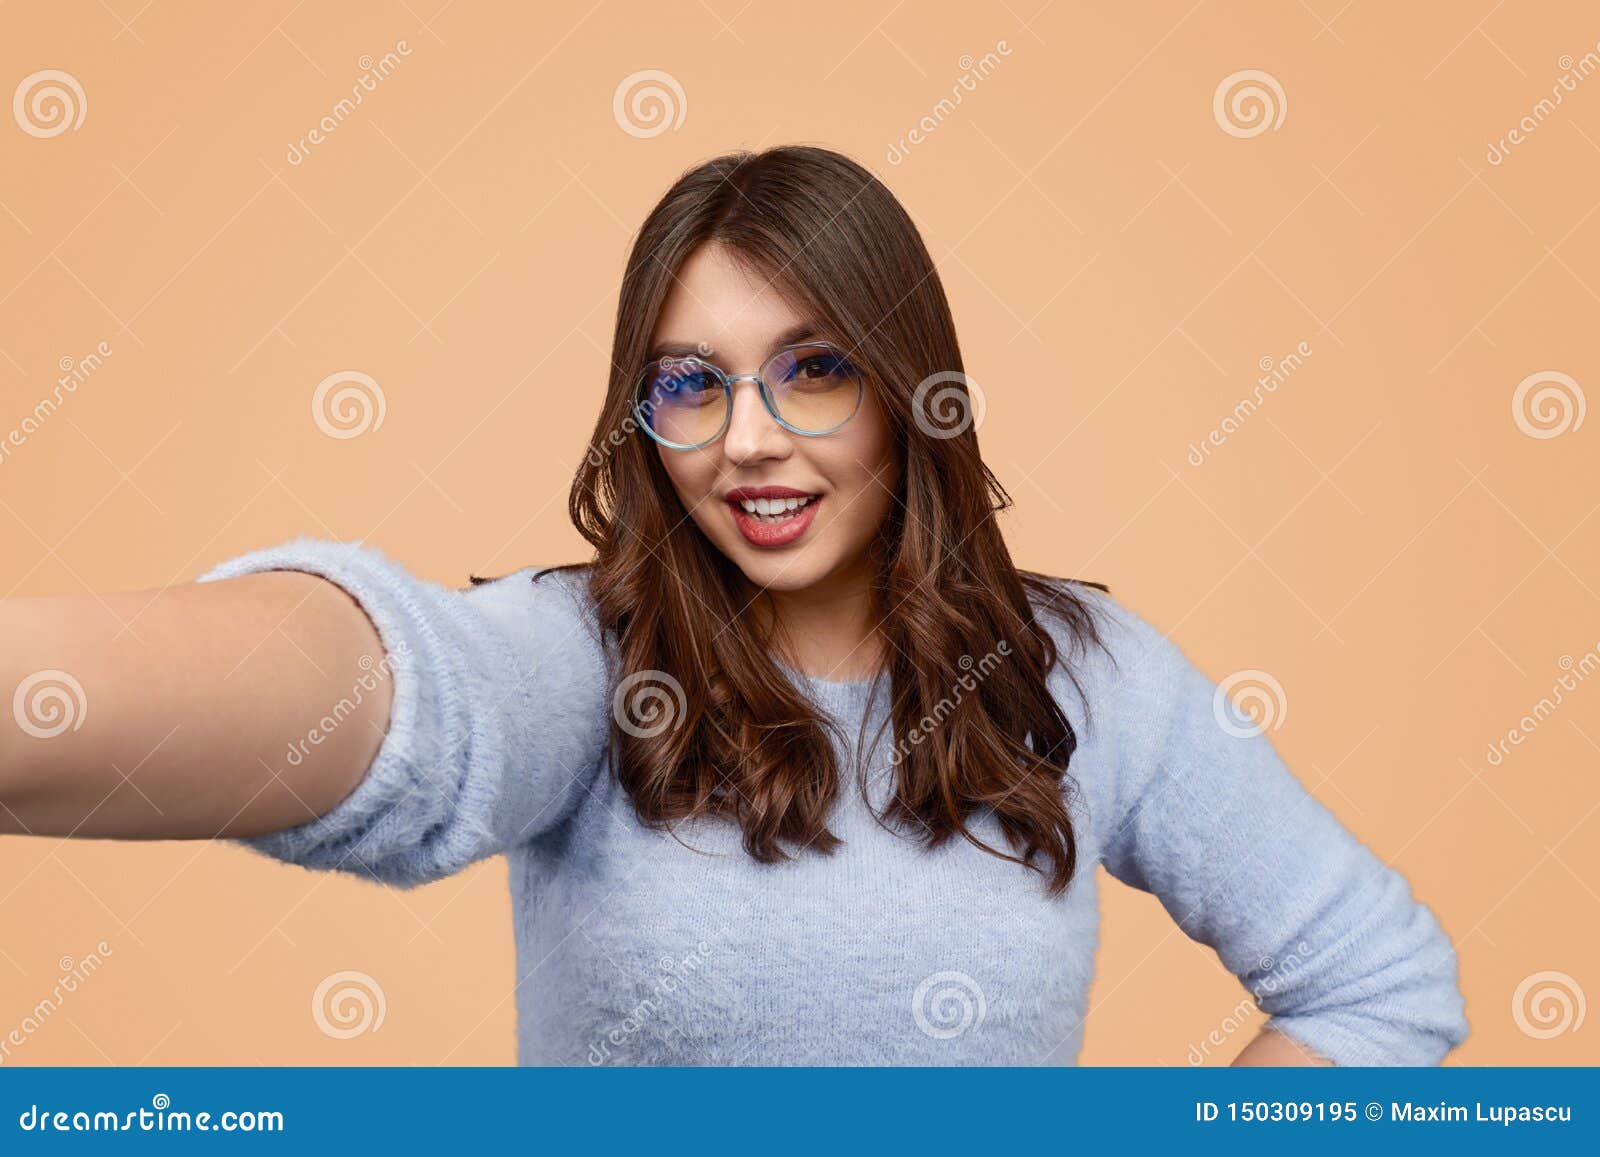 dan claffey add photo chubby brunette with glasses